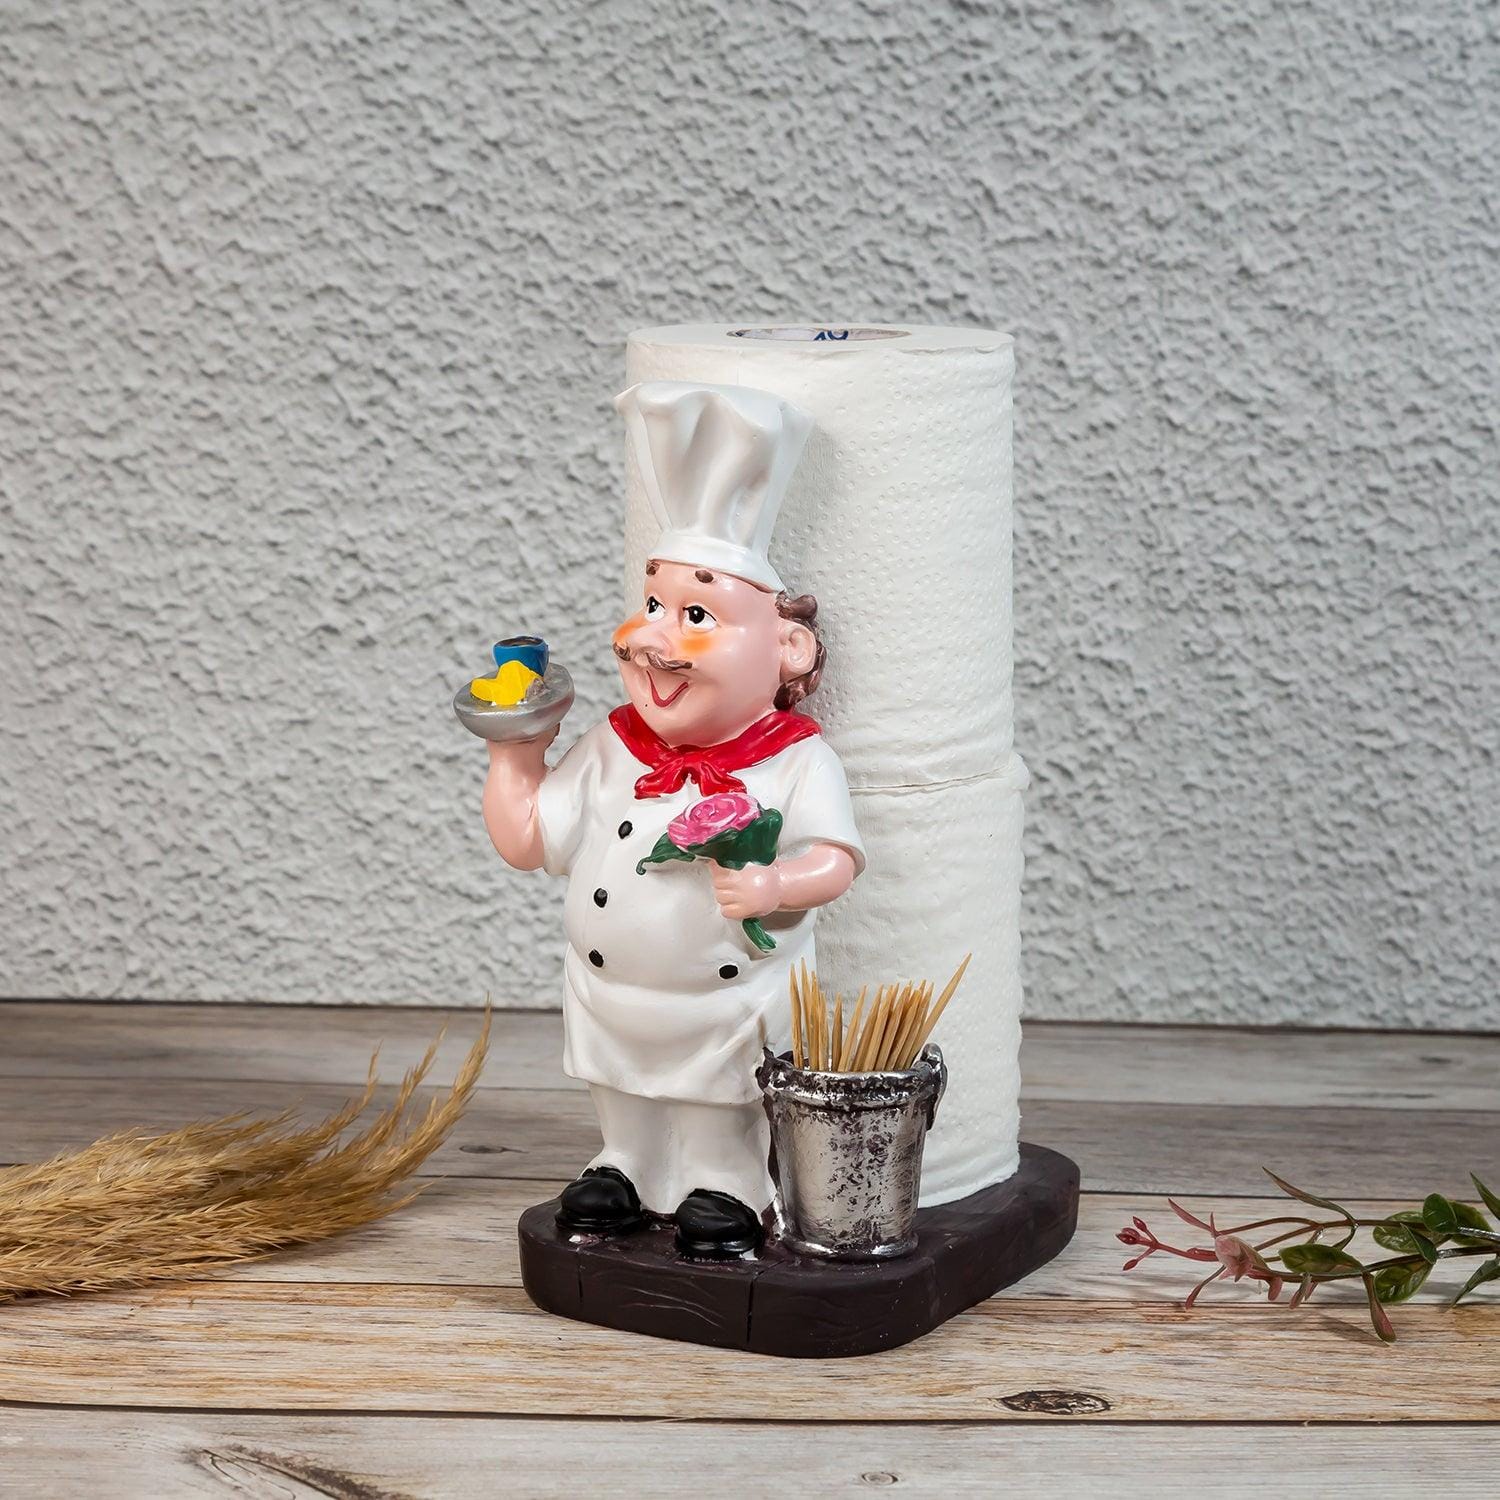 Foodie Chef Figurine Resin Kitchen Tissue Roll Holder with Toothpick Holder (Silver Bucket)